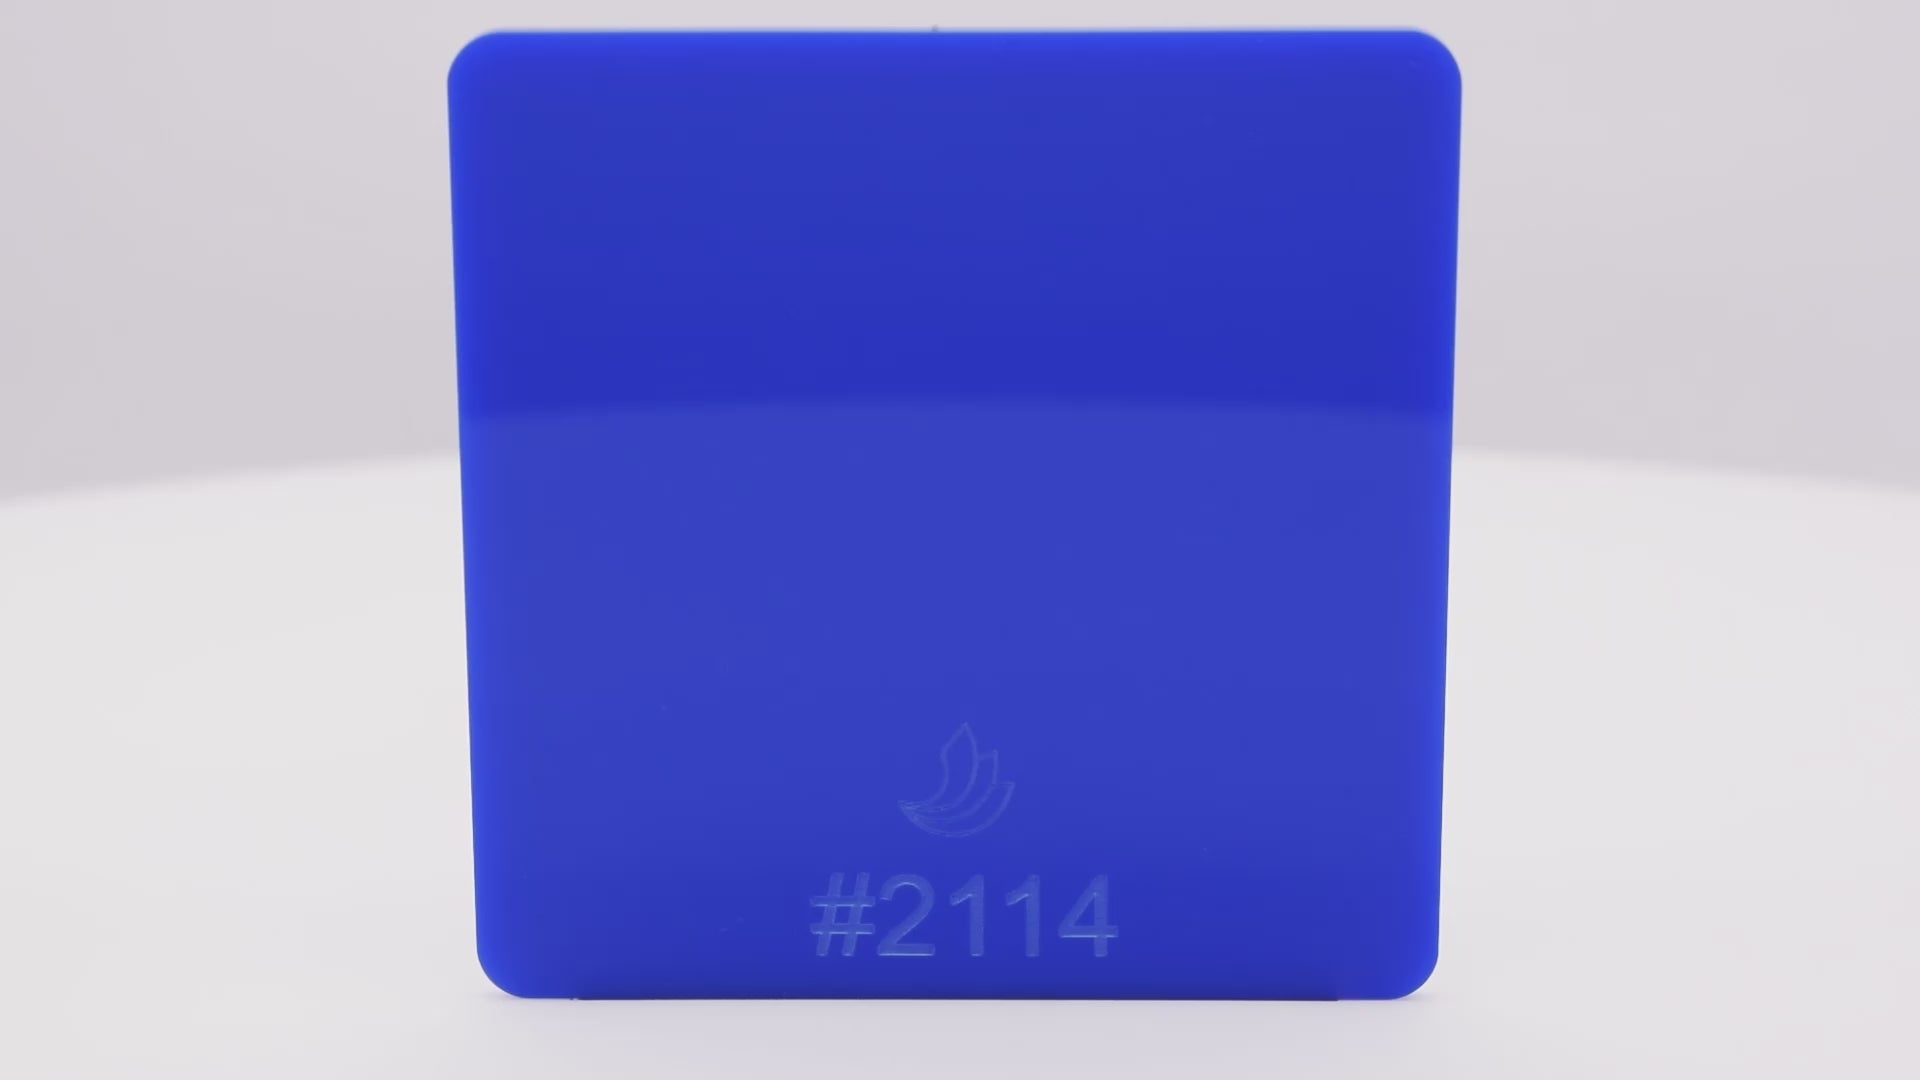 Hoja acrílica azul translúcida #2114 de 1/8"